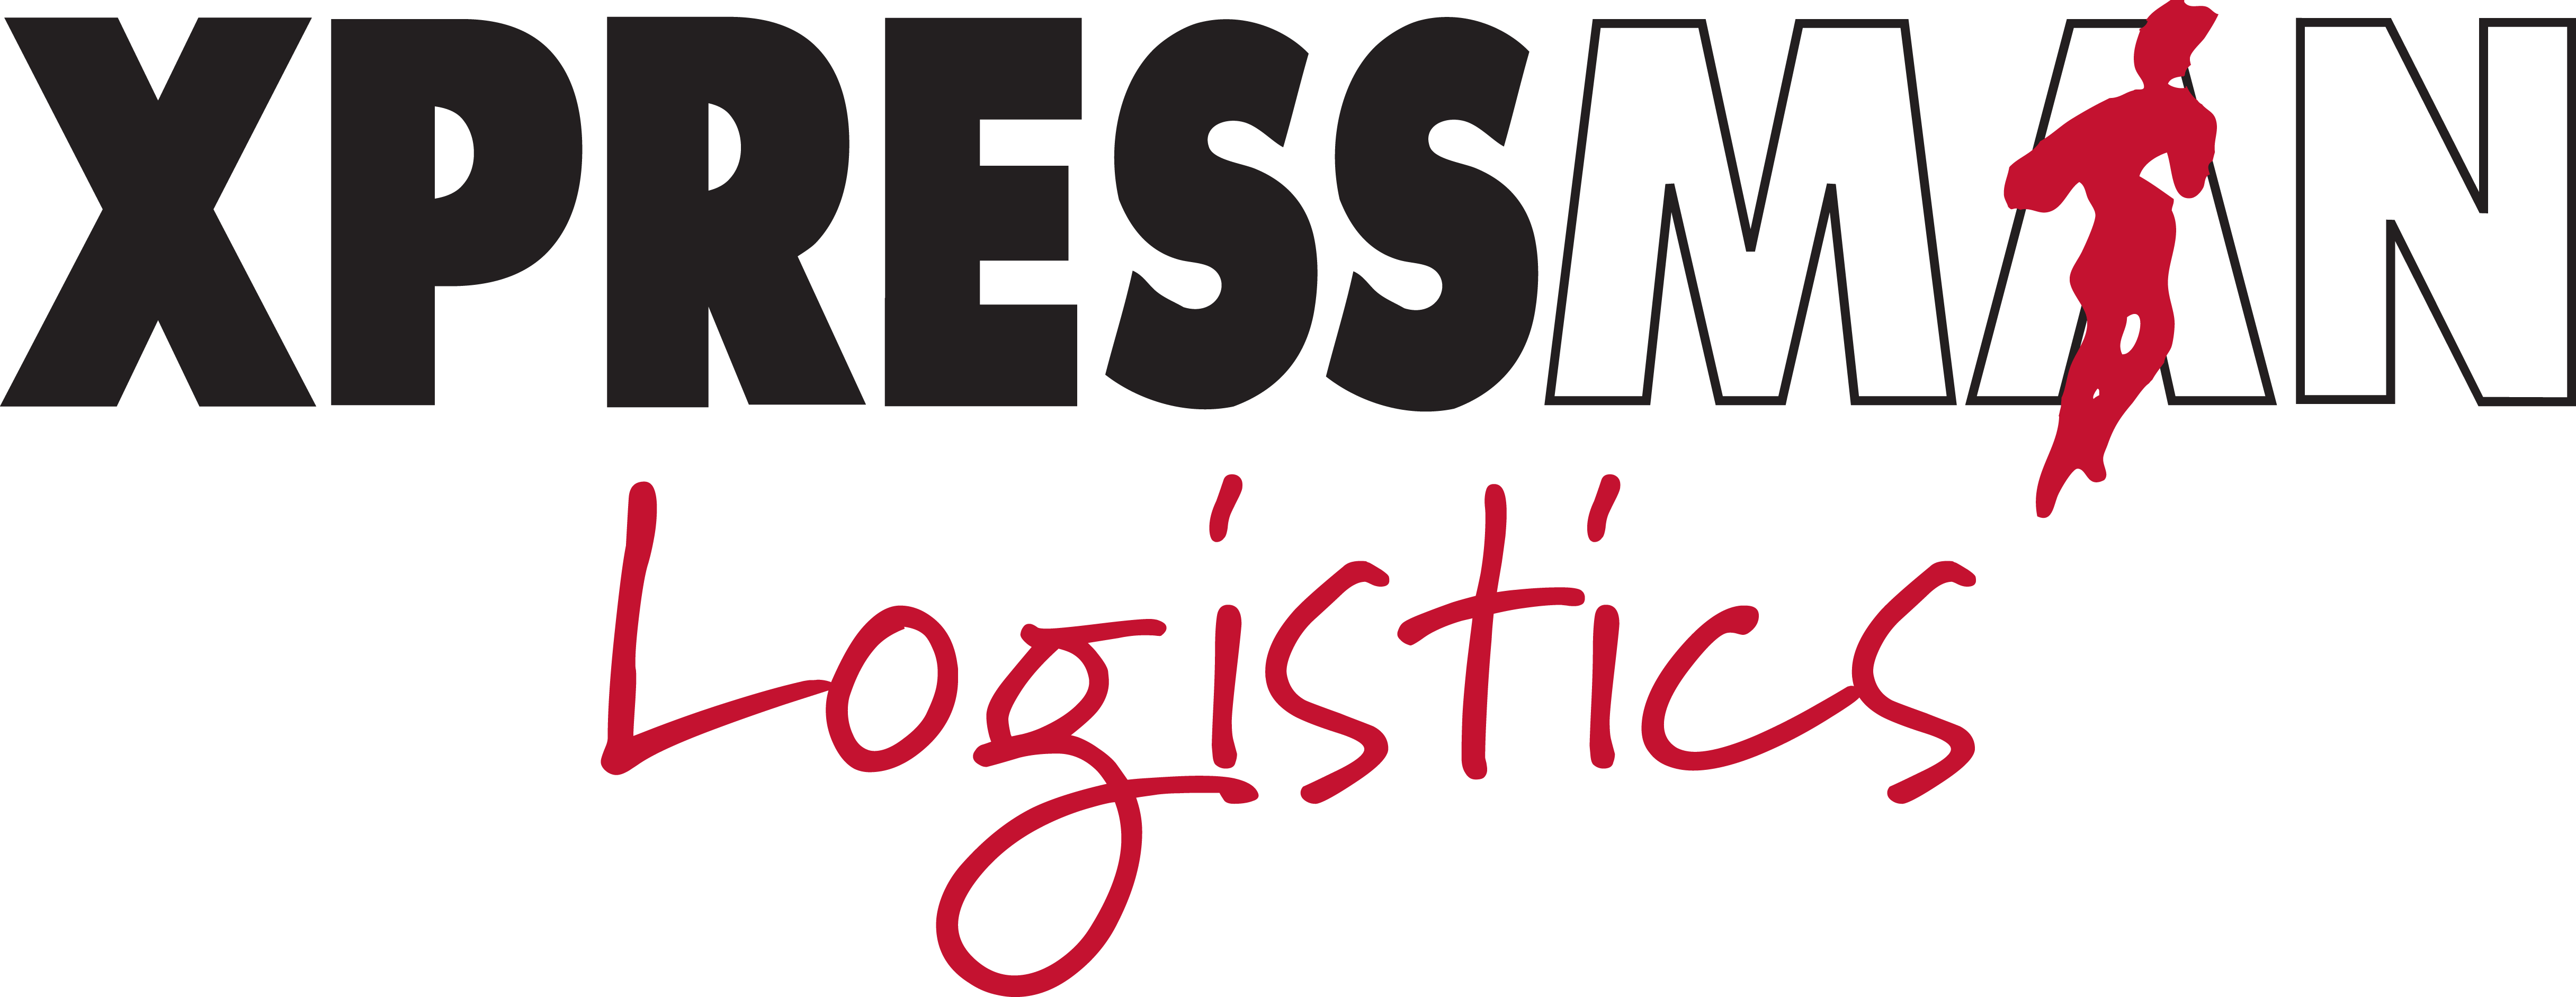 xpressman logistics trucking commercial courier logo